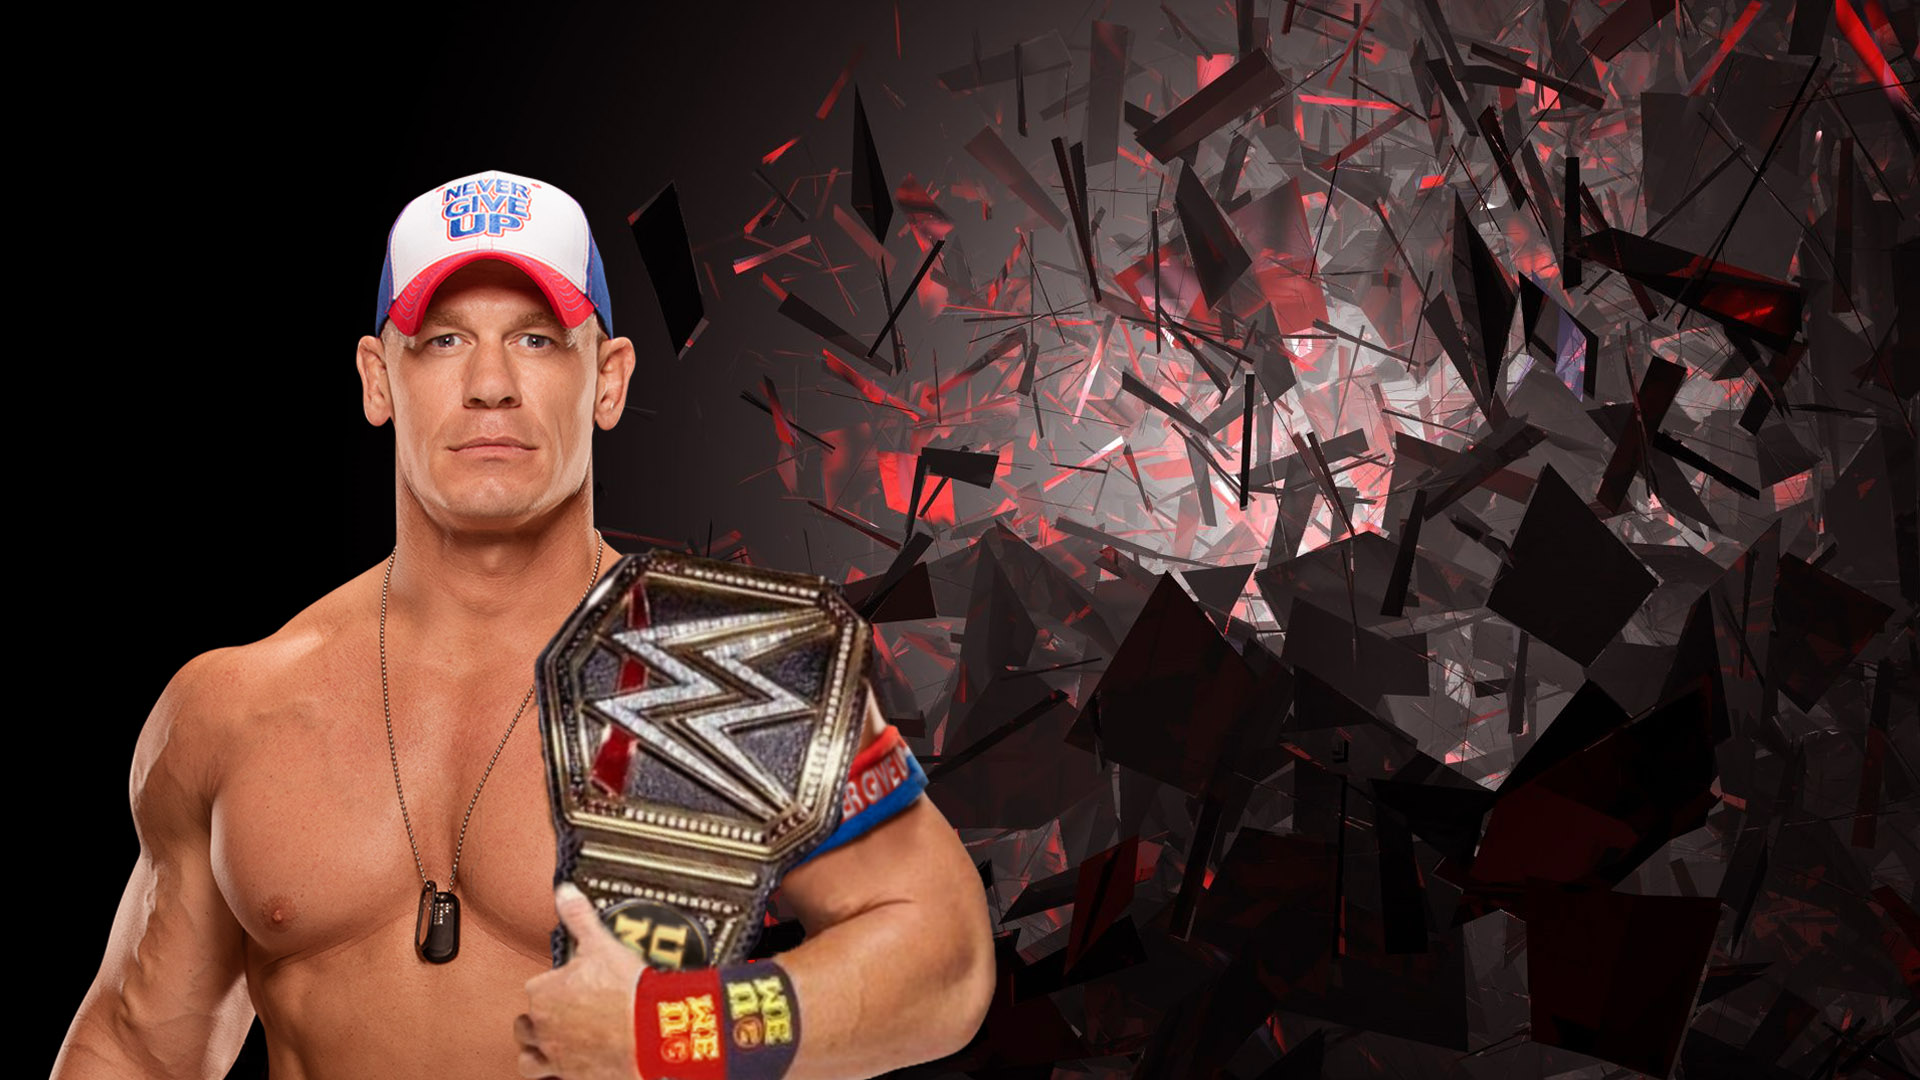 John Cena Background Puter Wallpaper Baltana